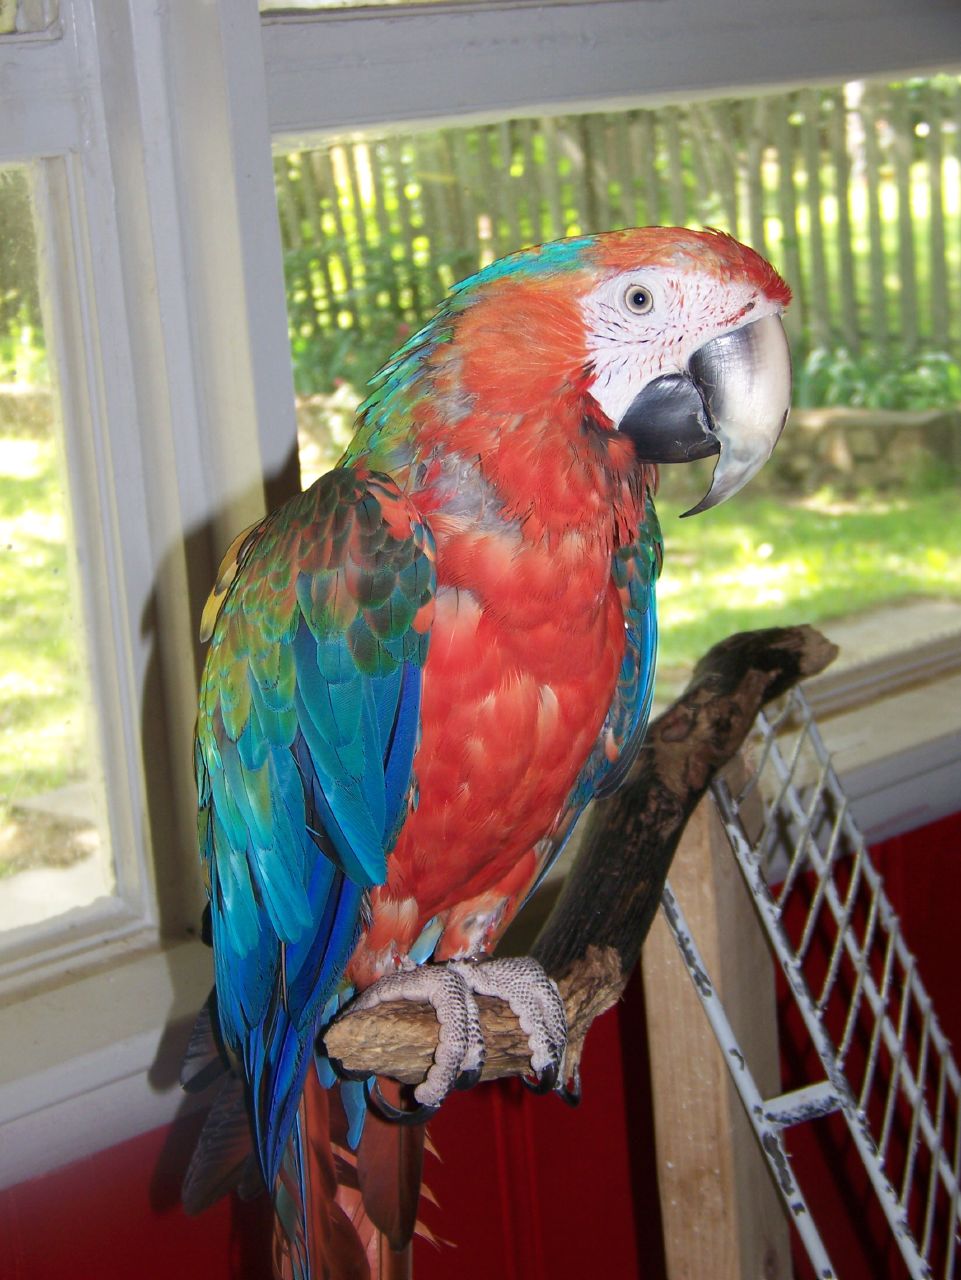 præambel at donere regional Catalina macaw - Wikipedia